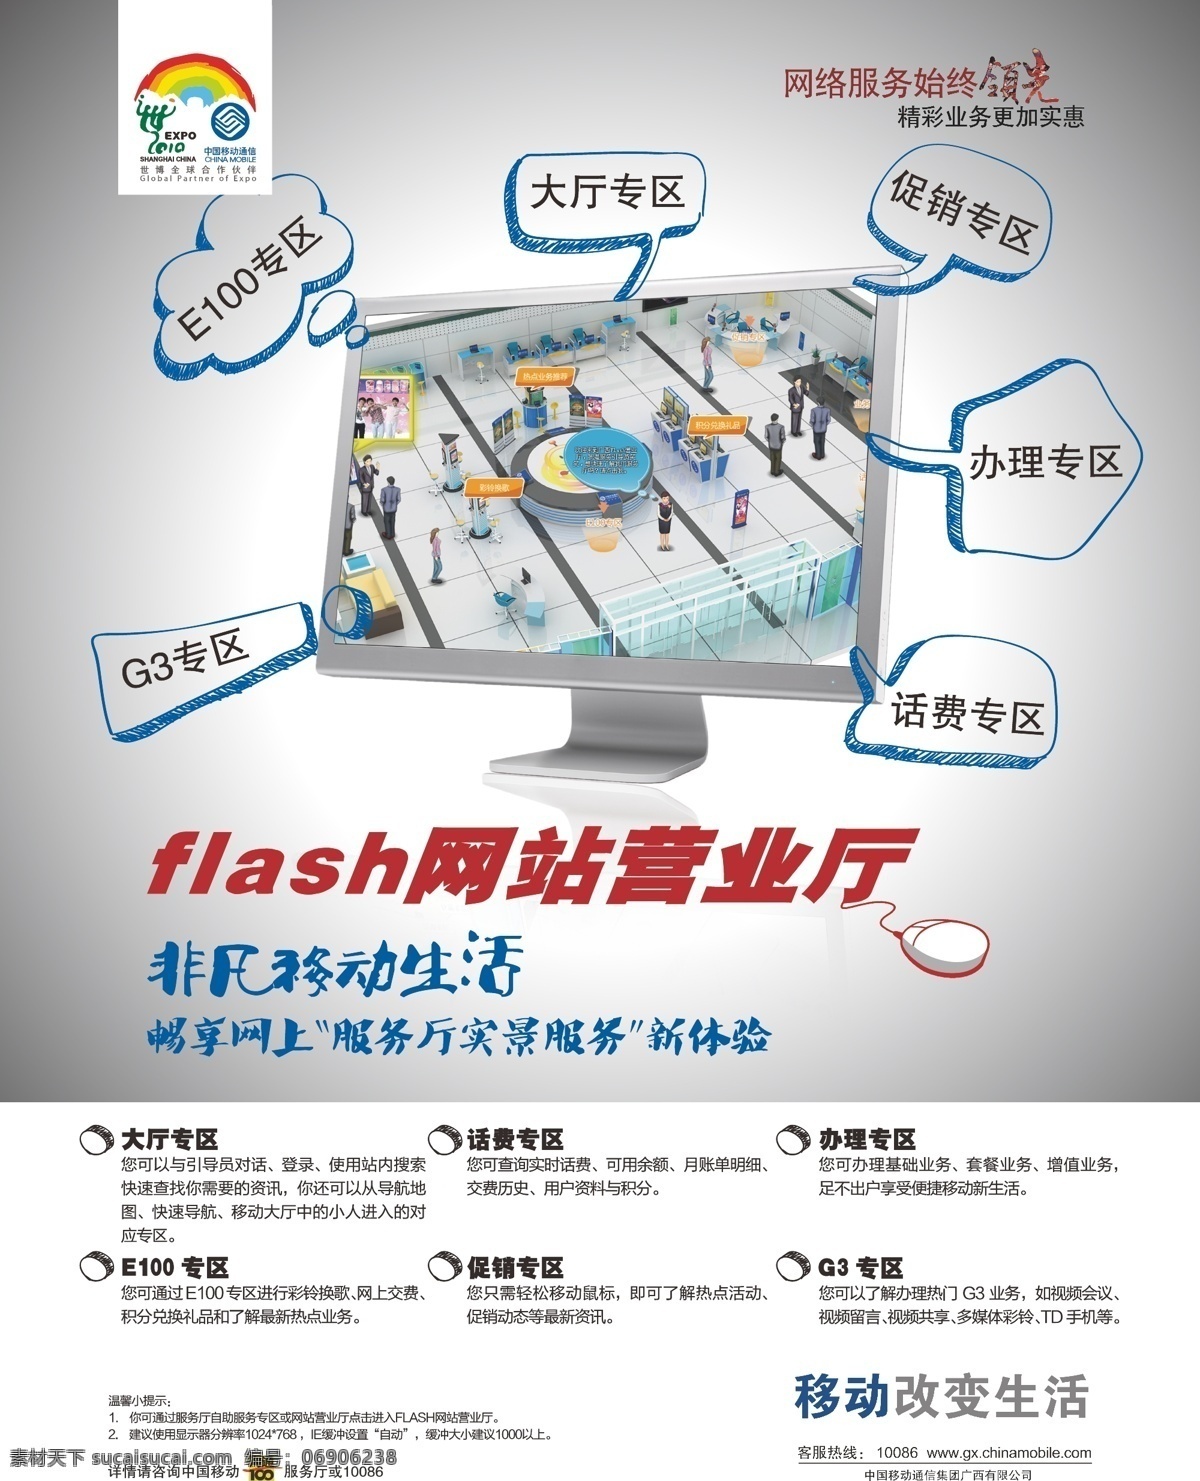 flash logo 背景板 动画 对话框 画面 鼠标 中国移动 网上 营业厅 海报 矢量 模板下载 网上营业厅 显示器 海报背景图